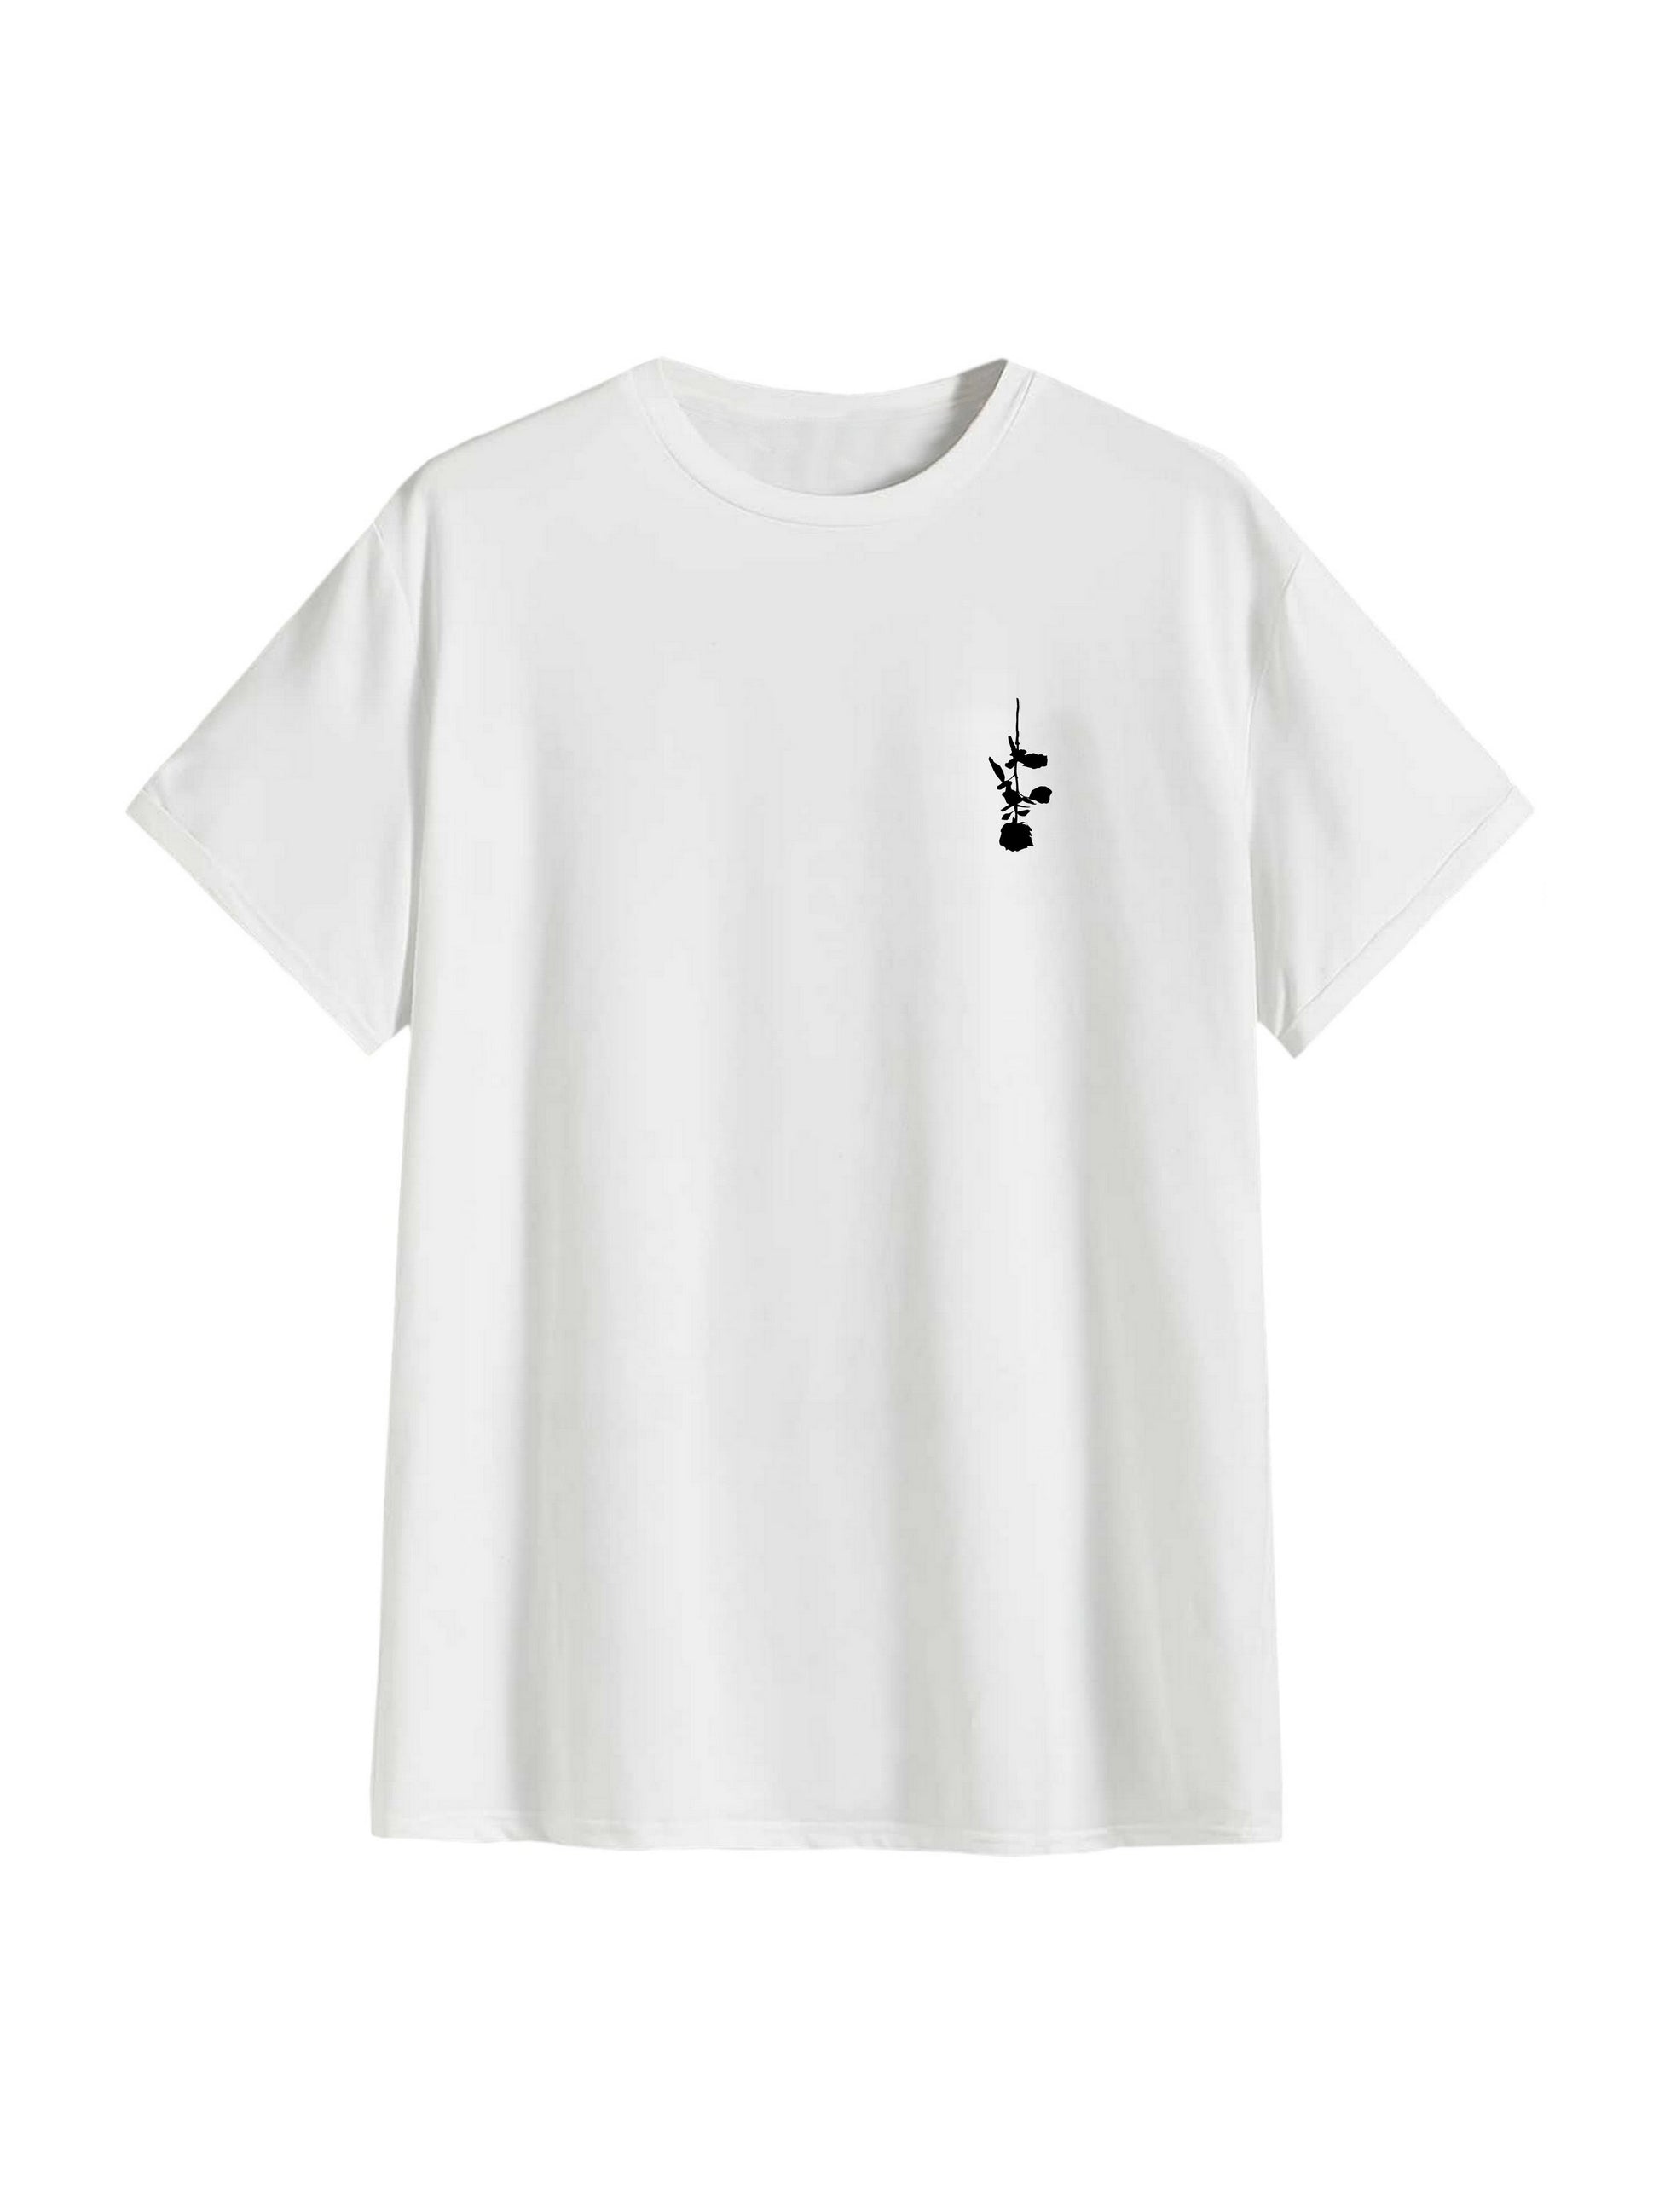 Tee shirt logo rose minimaliste blanc